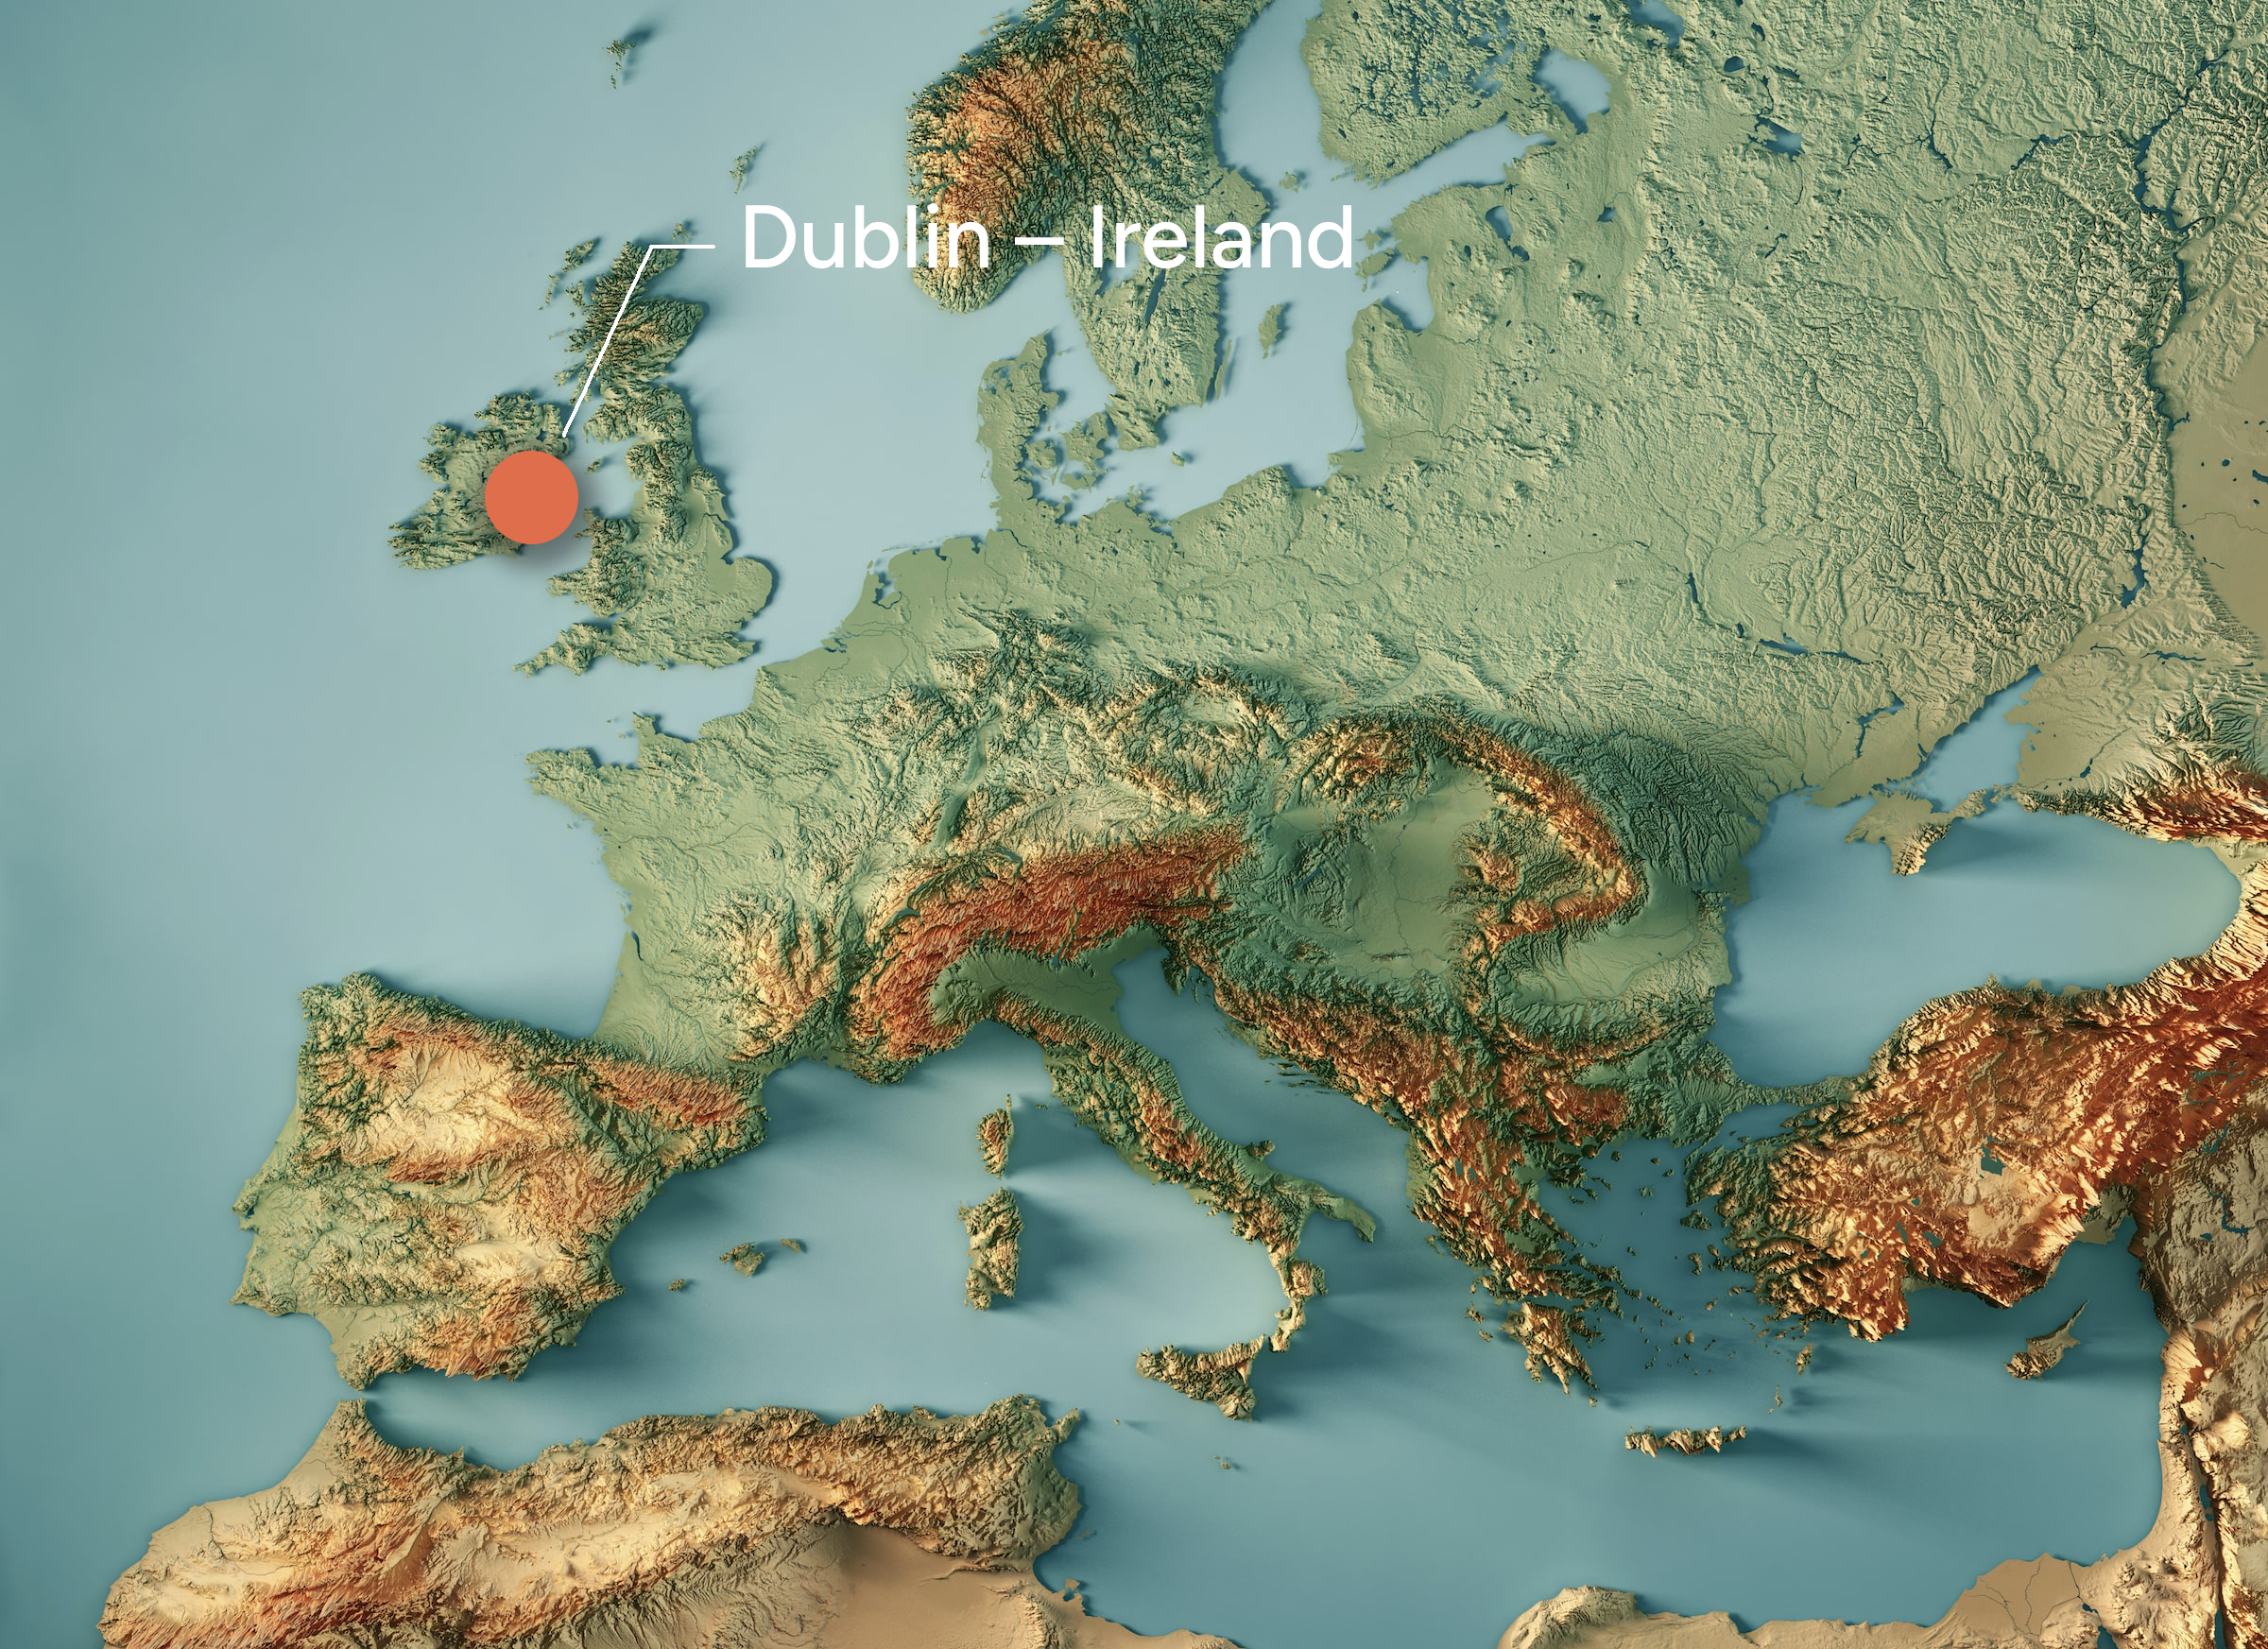 Topography map of Europe highlighting Dublin, Ireland